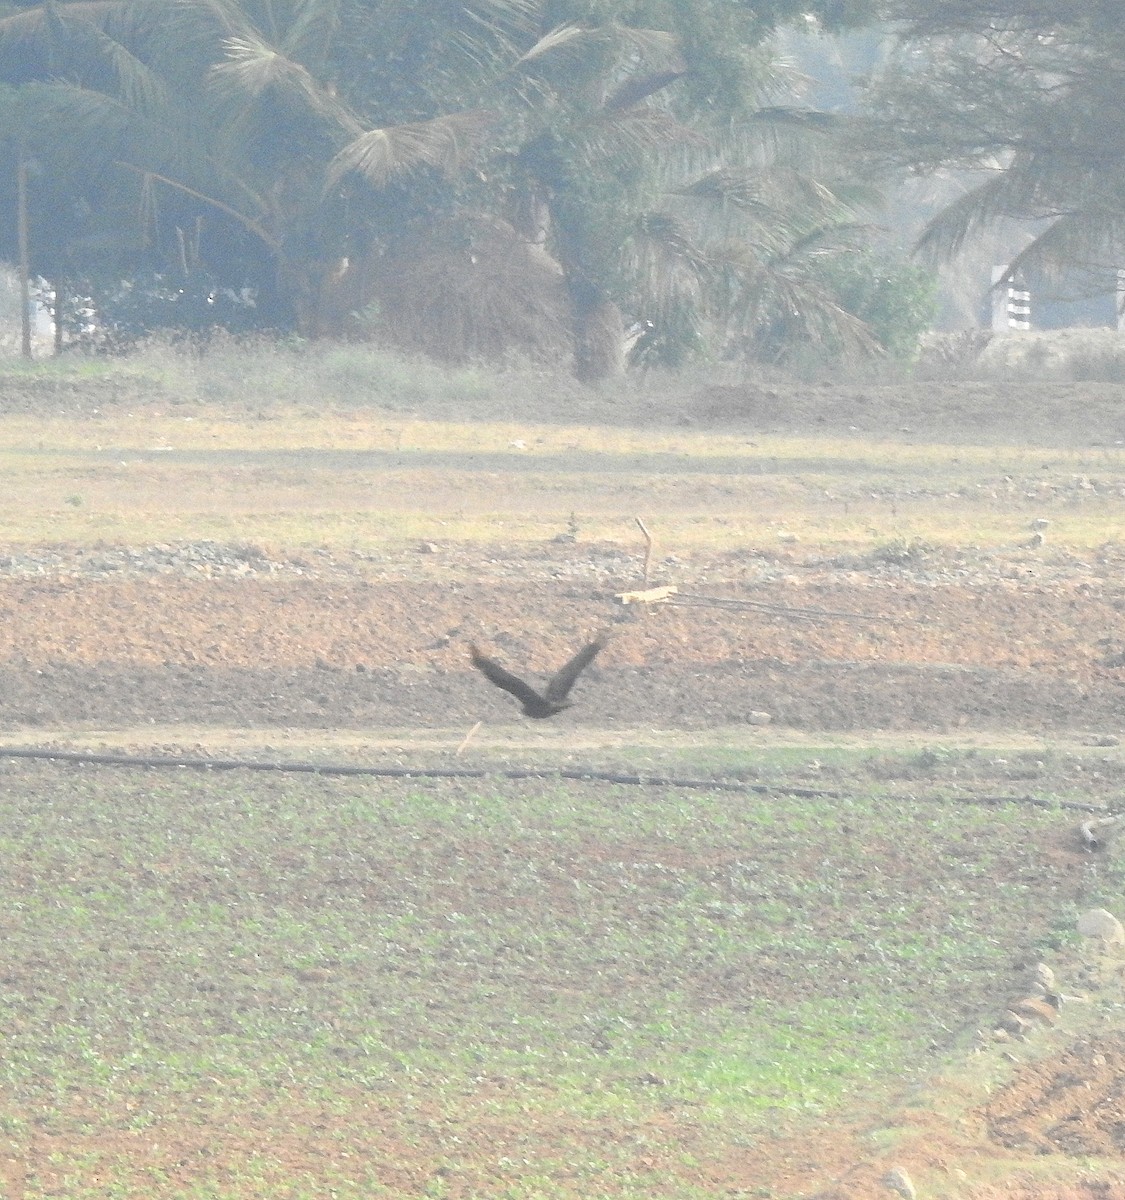 Western Marsh Harrier - Shivaprakash Adavanne